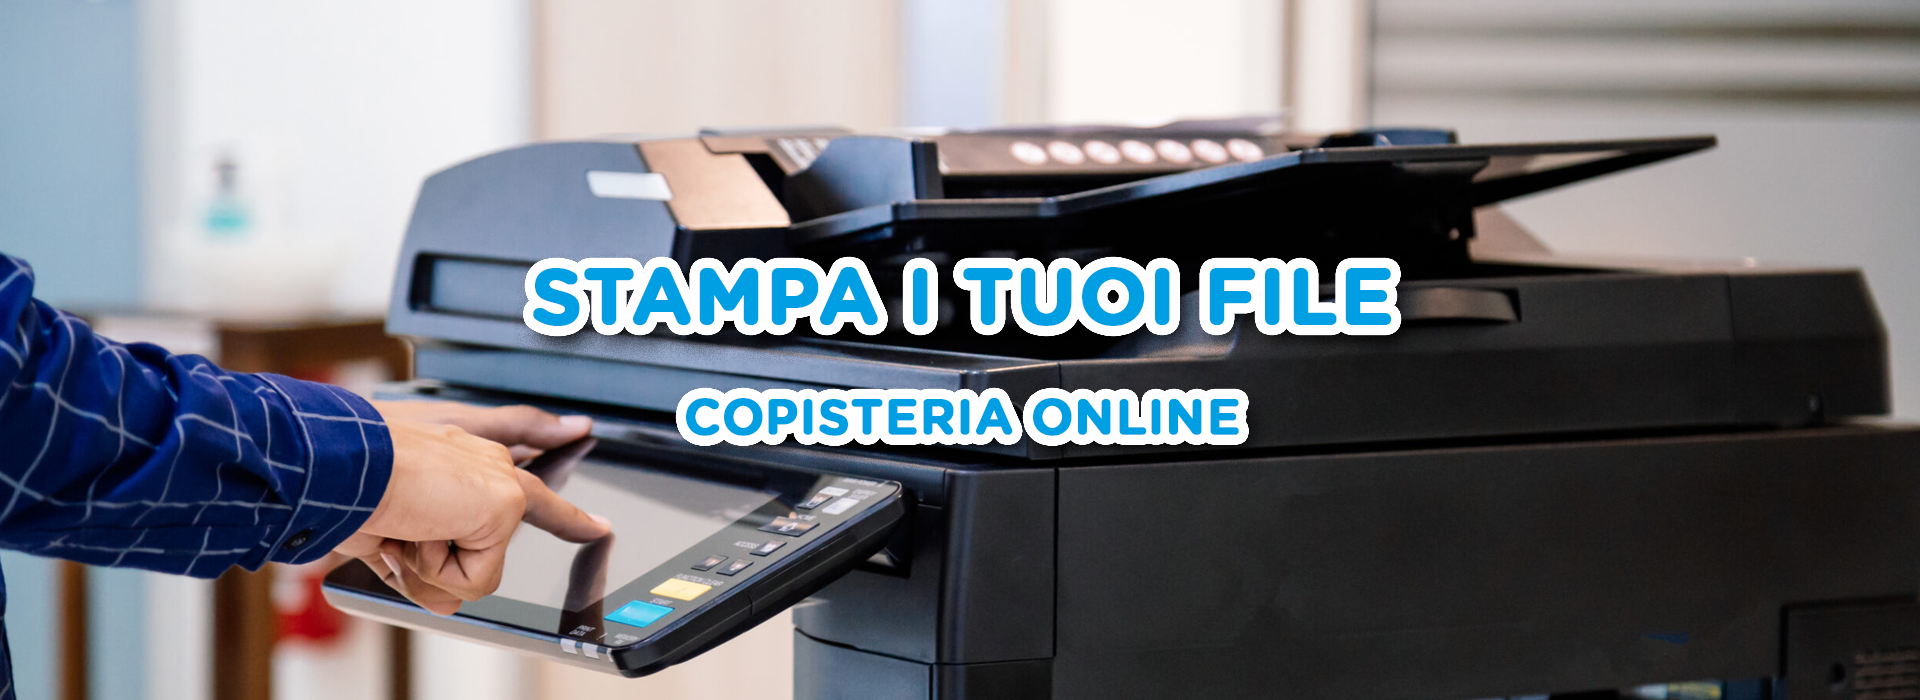 Copisteria Online - hover